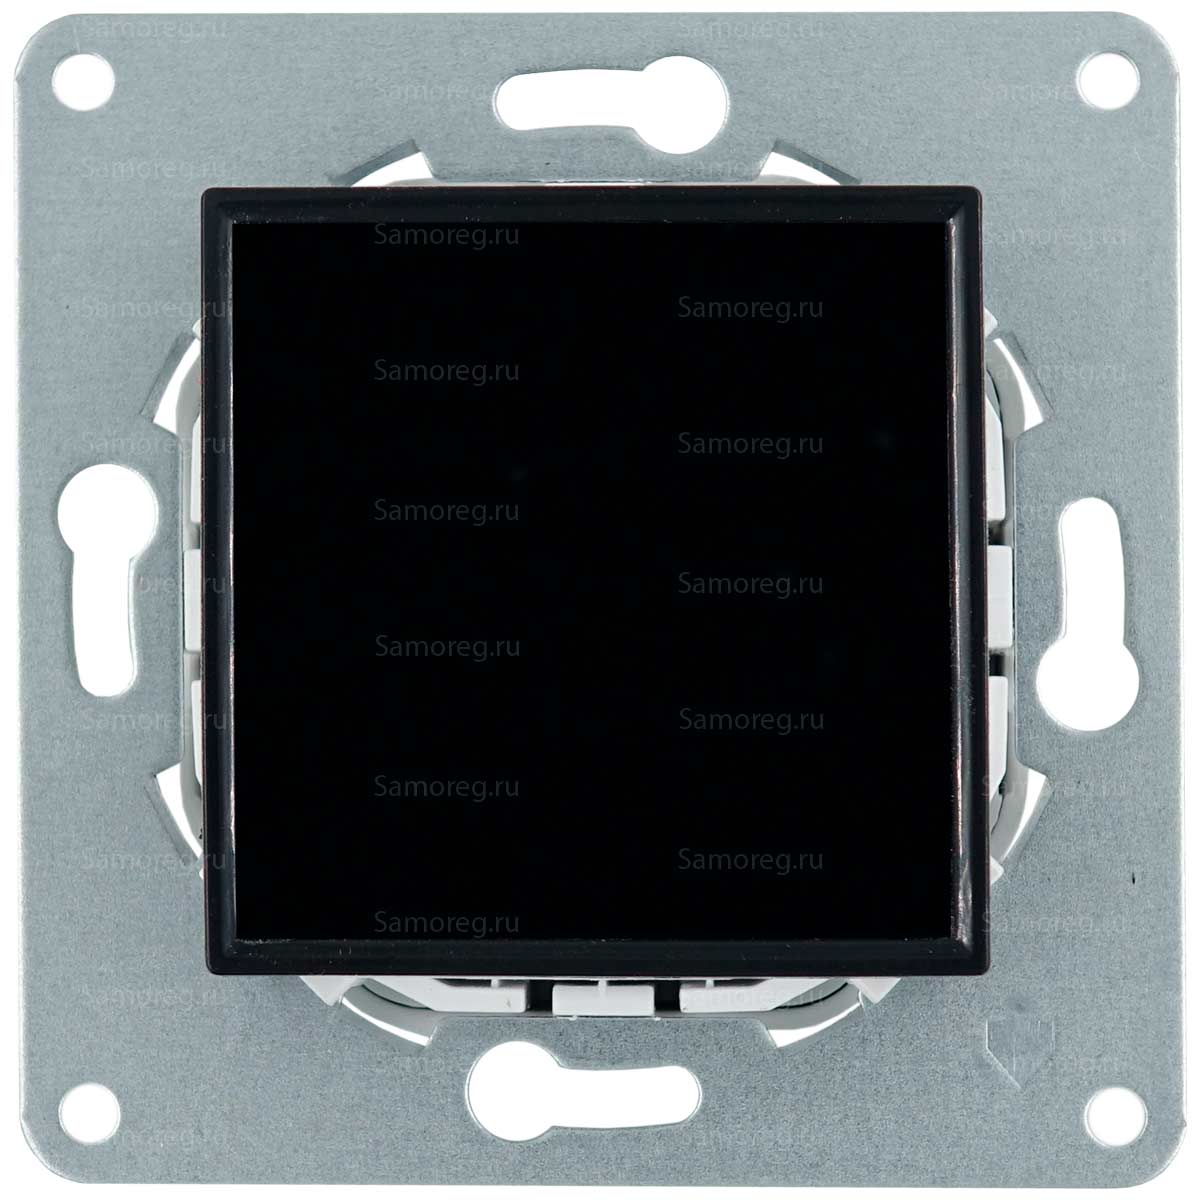 Терморегулятор Теплолюкс EcoSmart 25 чёрный